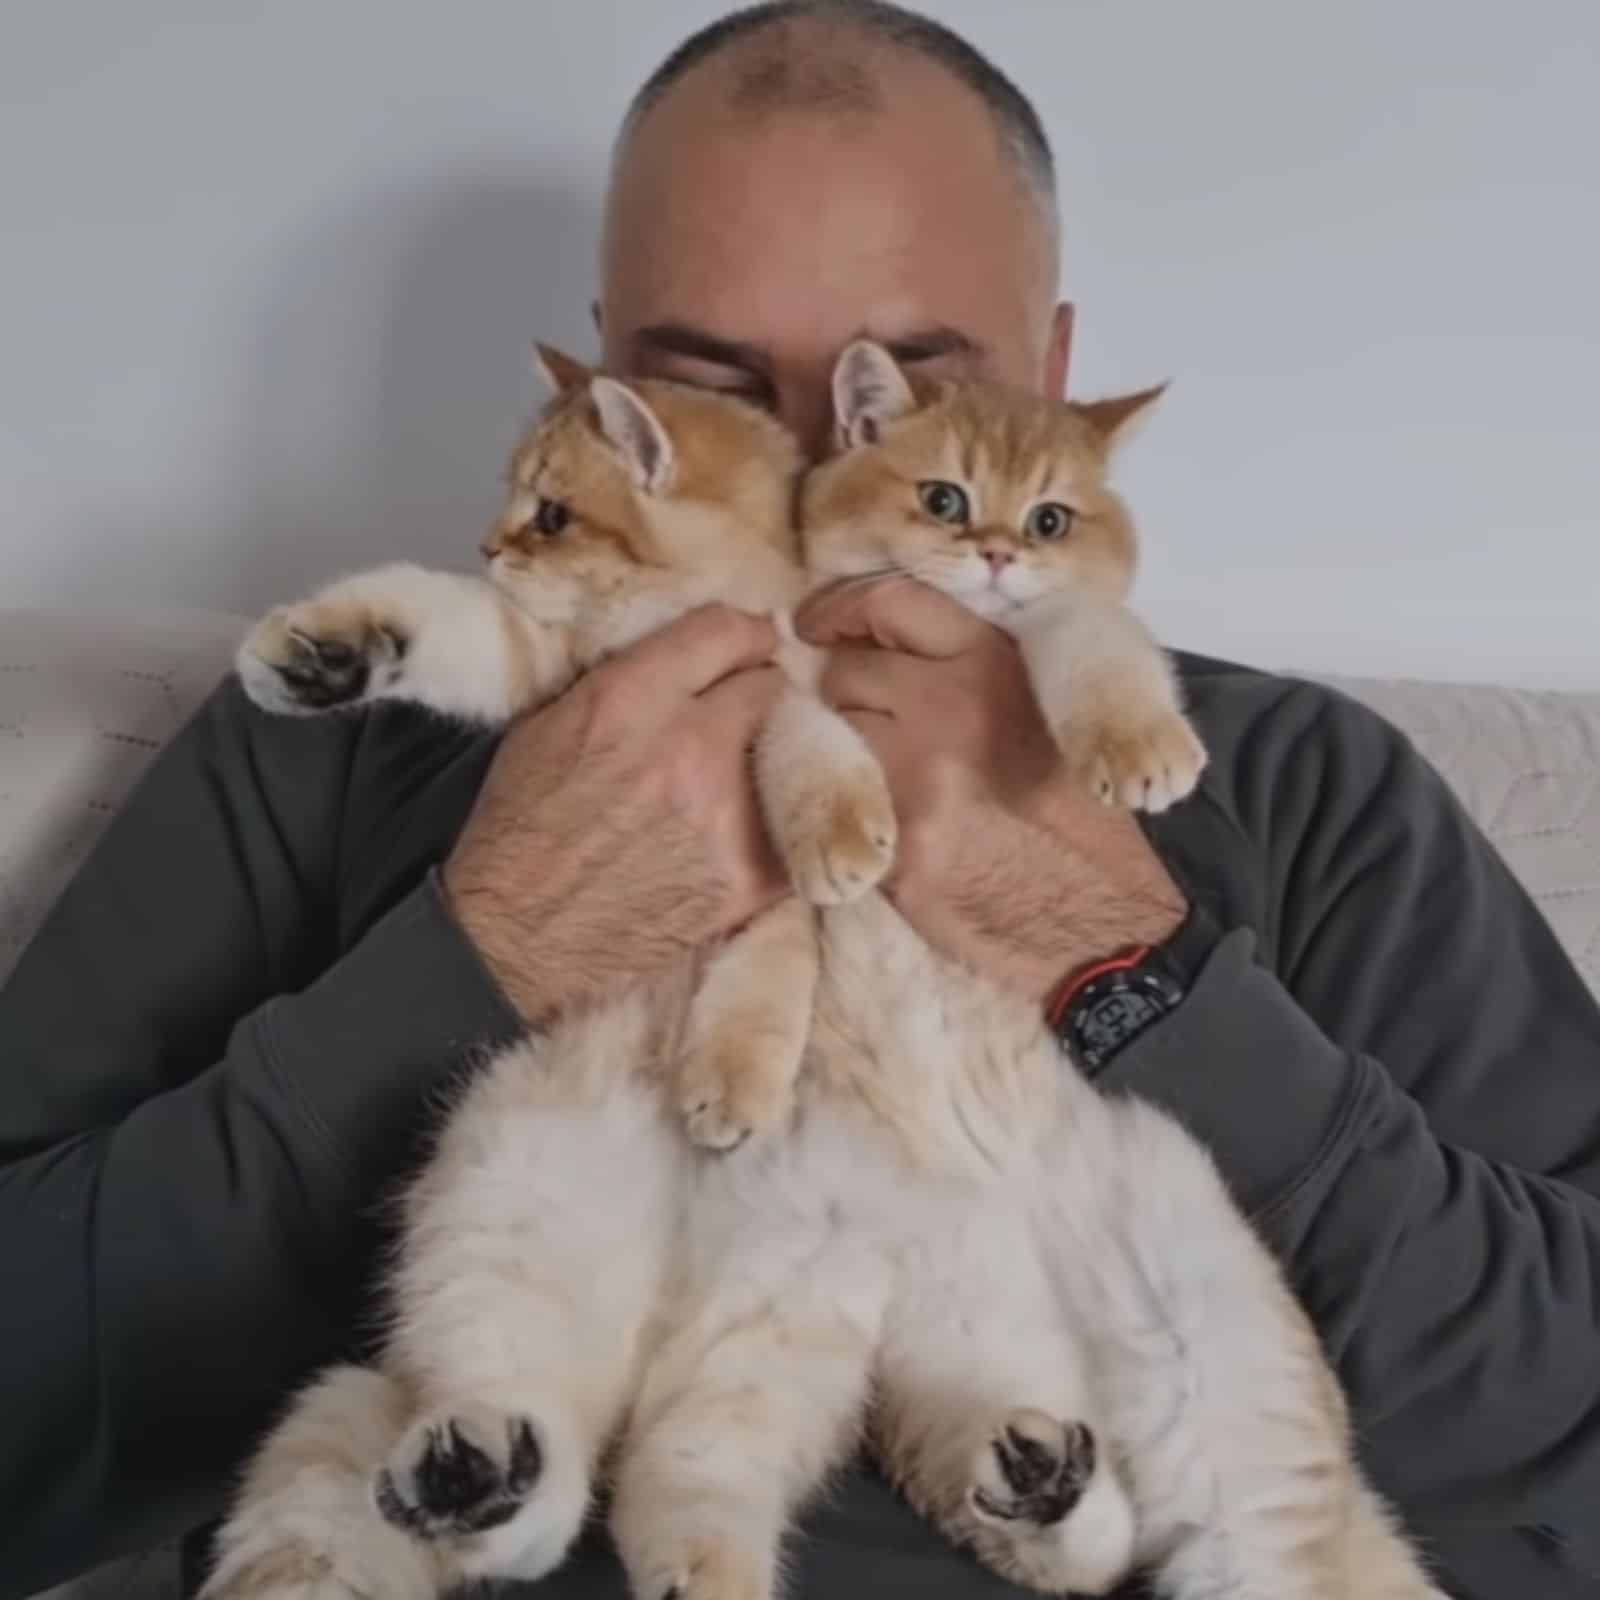 grandpa holding two kittens